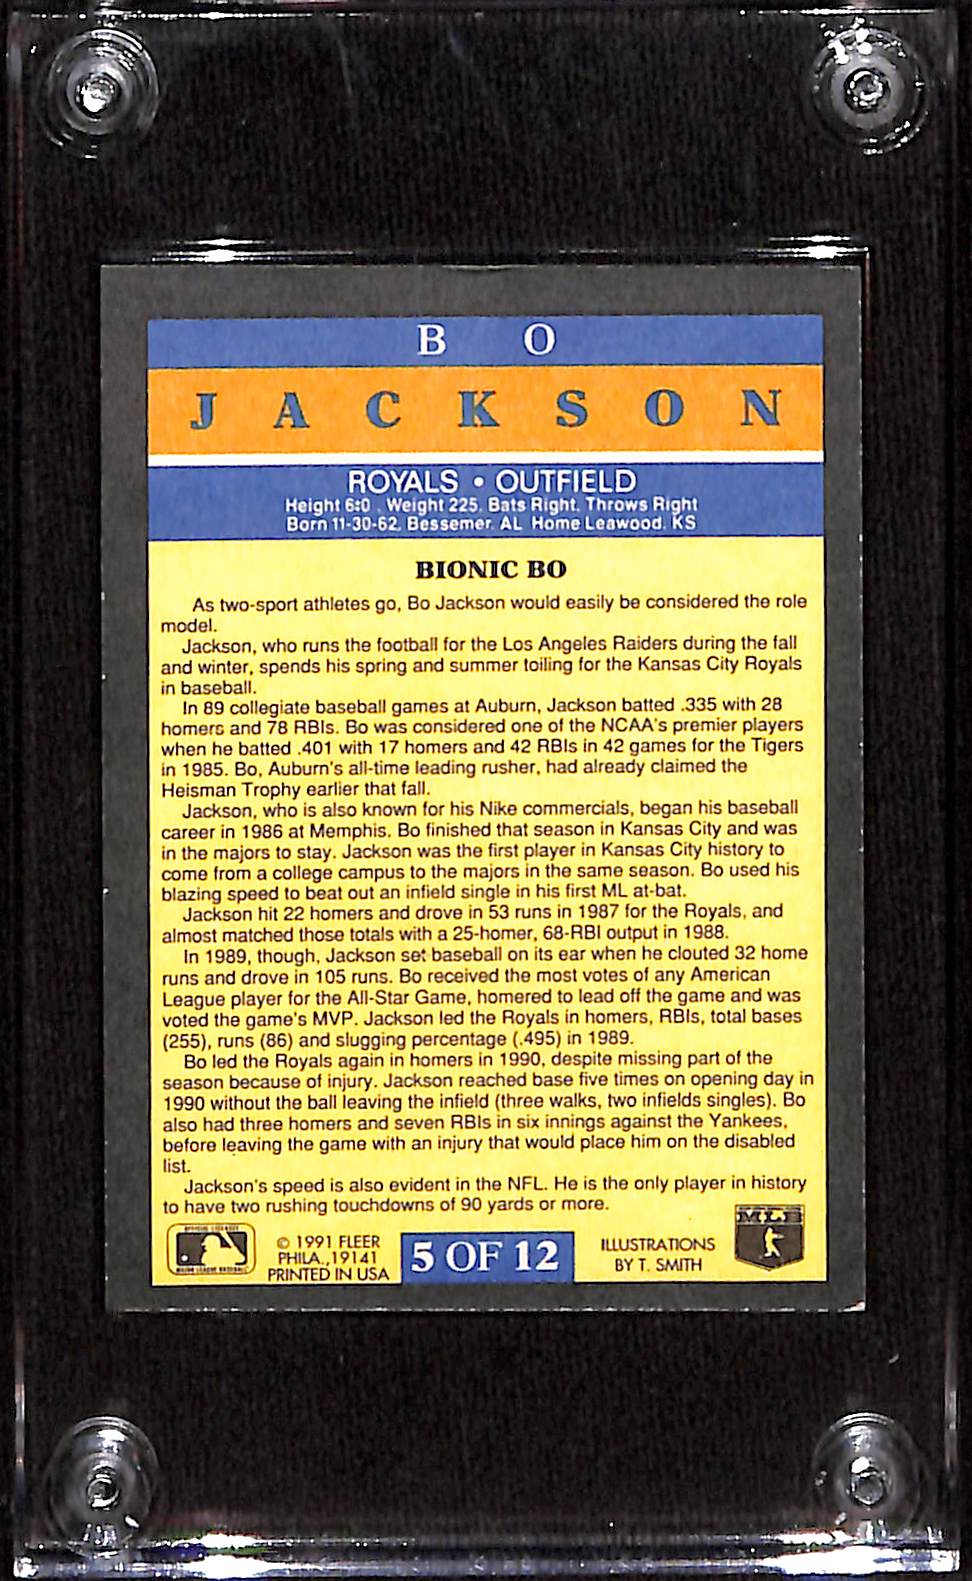 FIINR Baseball Card 1991 Fleer Bo Jackson MLB Baseball Card Royals #5 - Mint Condition